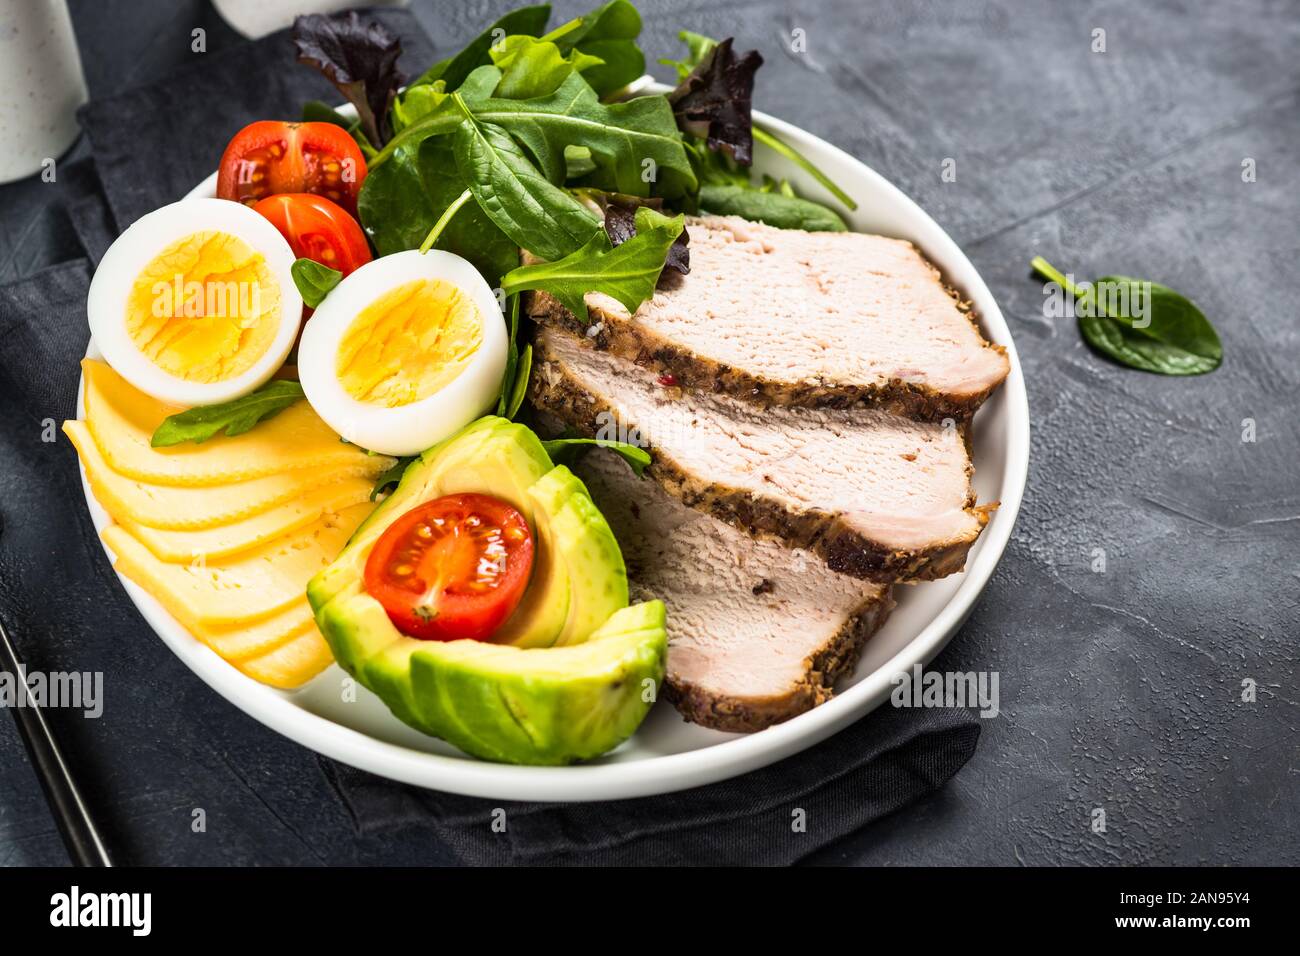 Keto diet plate on black stone table Stock Photo - Alamy